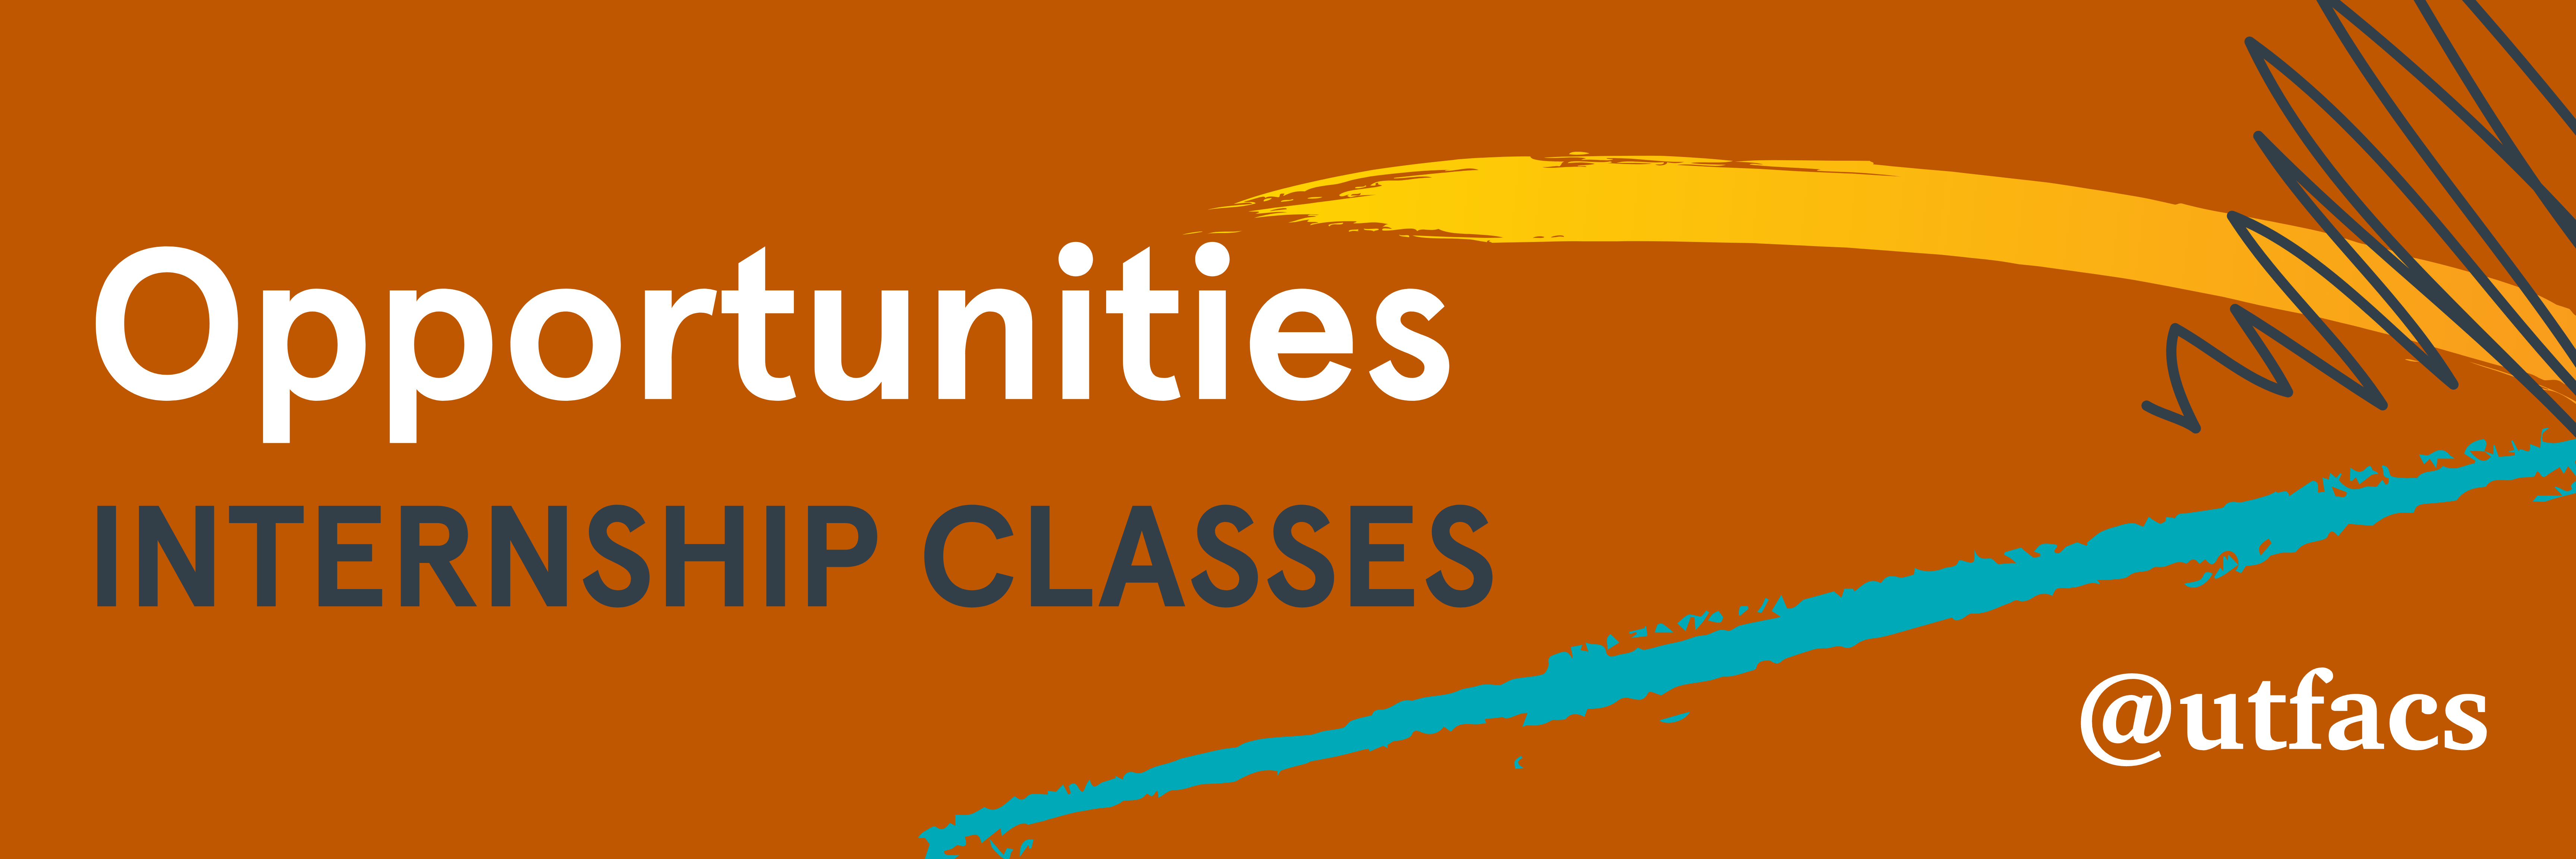 Opportunities: Internship Classes